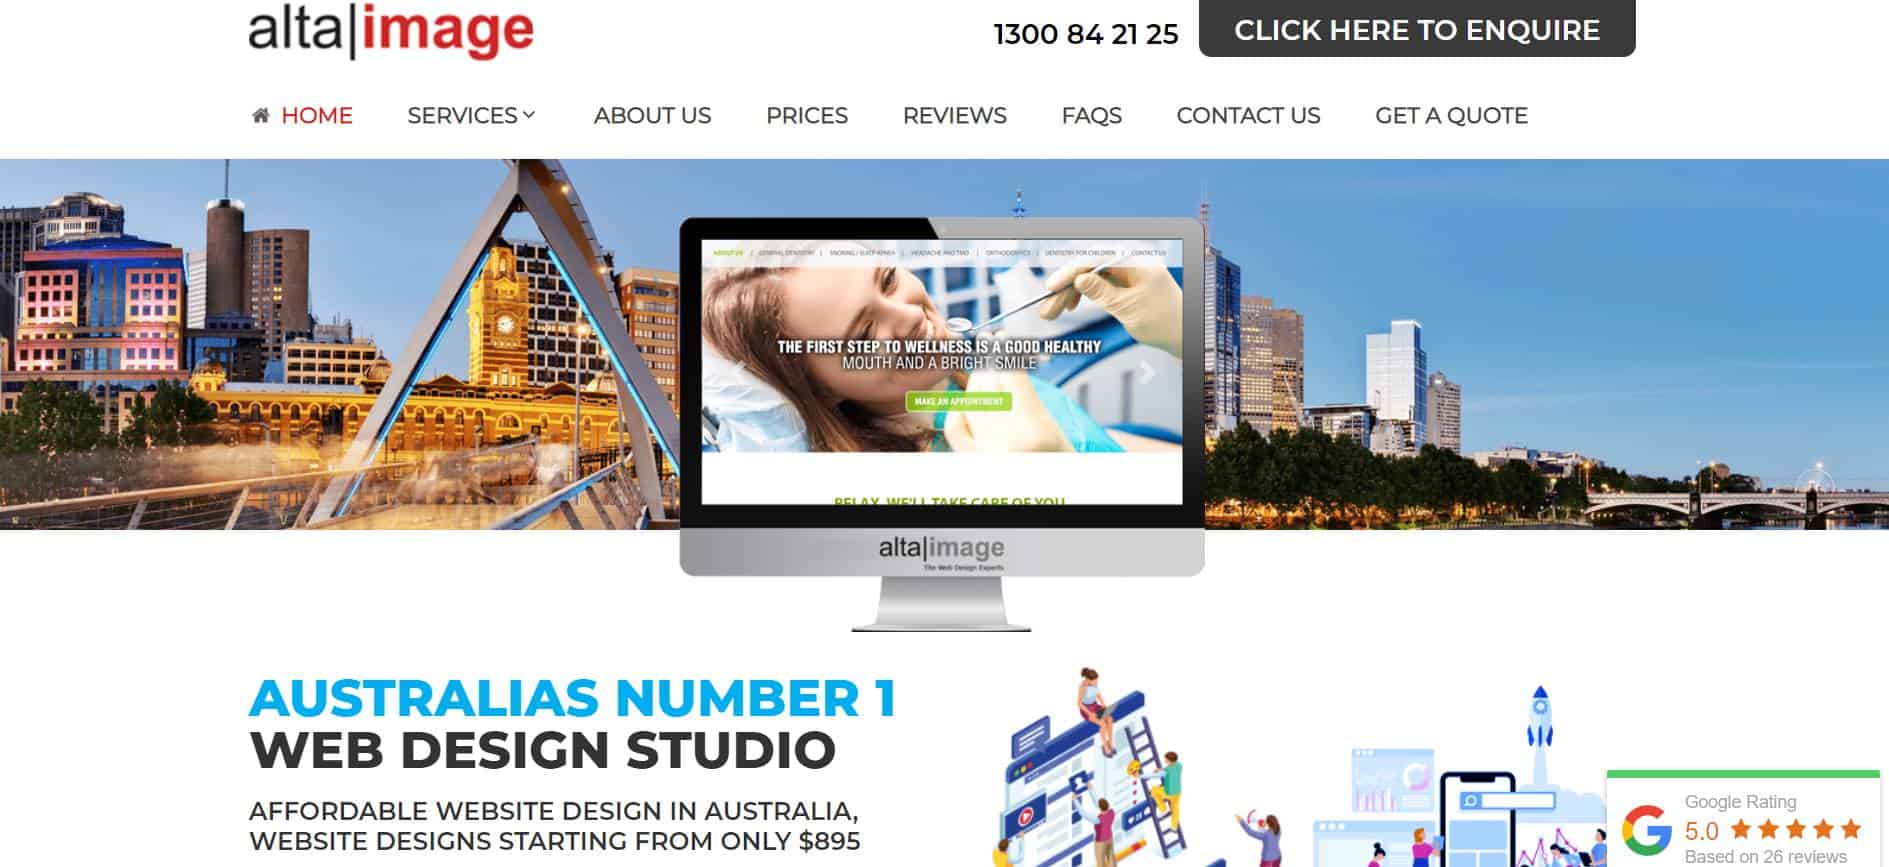 alta image website designers melbourne